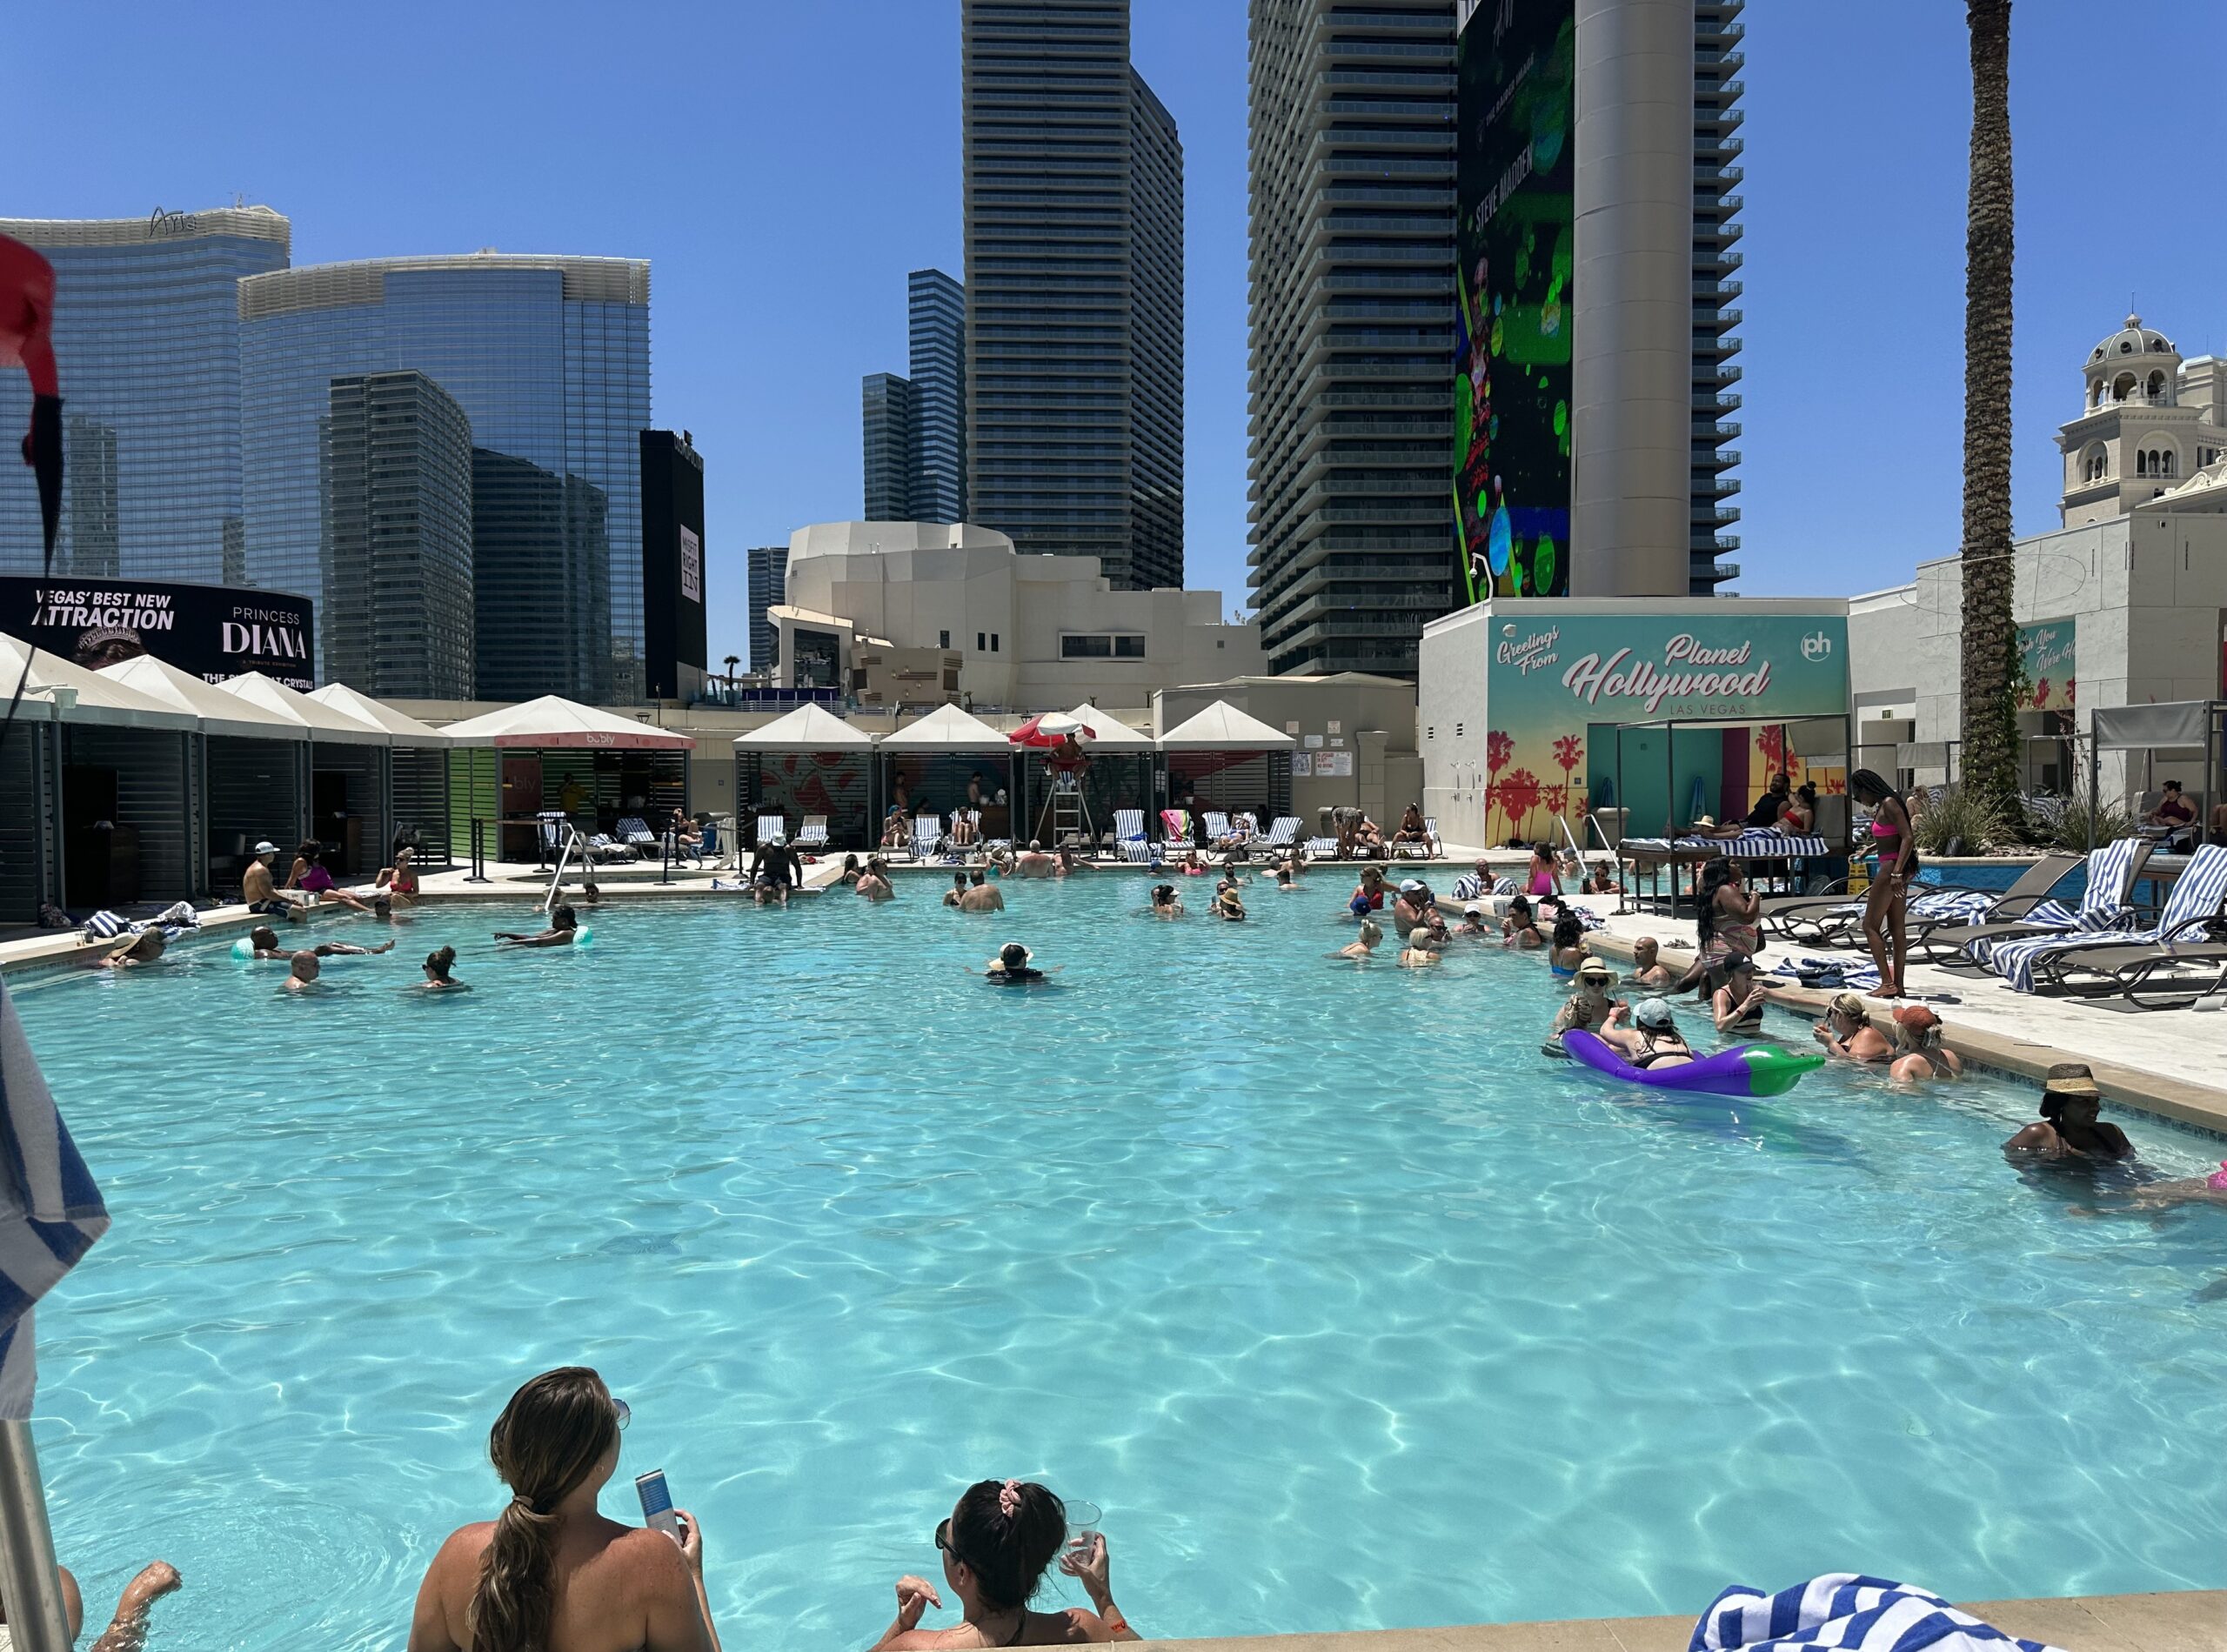 Paris Las Vegas Pool: Hours and Amenities - Midlife Miles